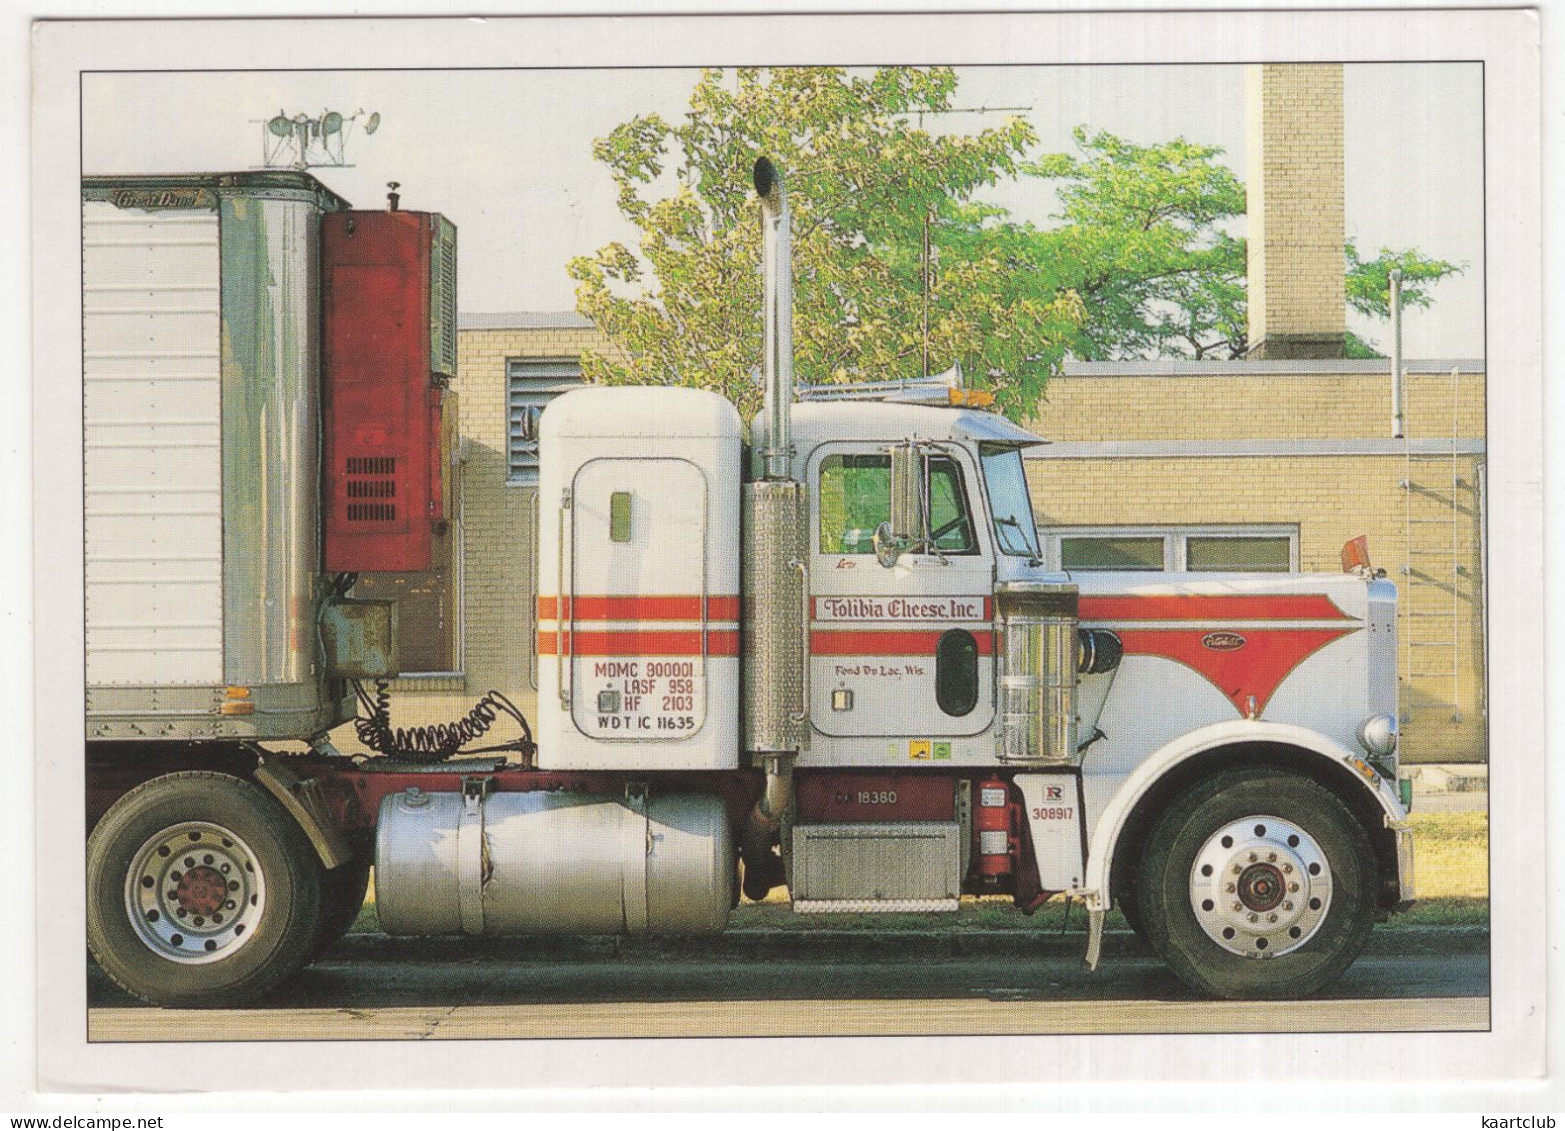 PETERBILT TRUCK - Tolibia Cheese Inc. - (CA., USA) - Camión & Camioneta